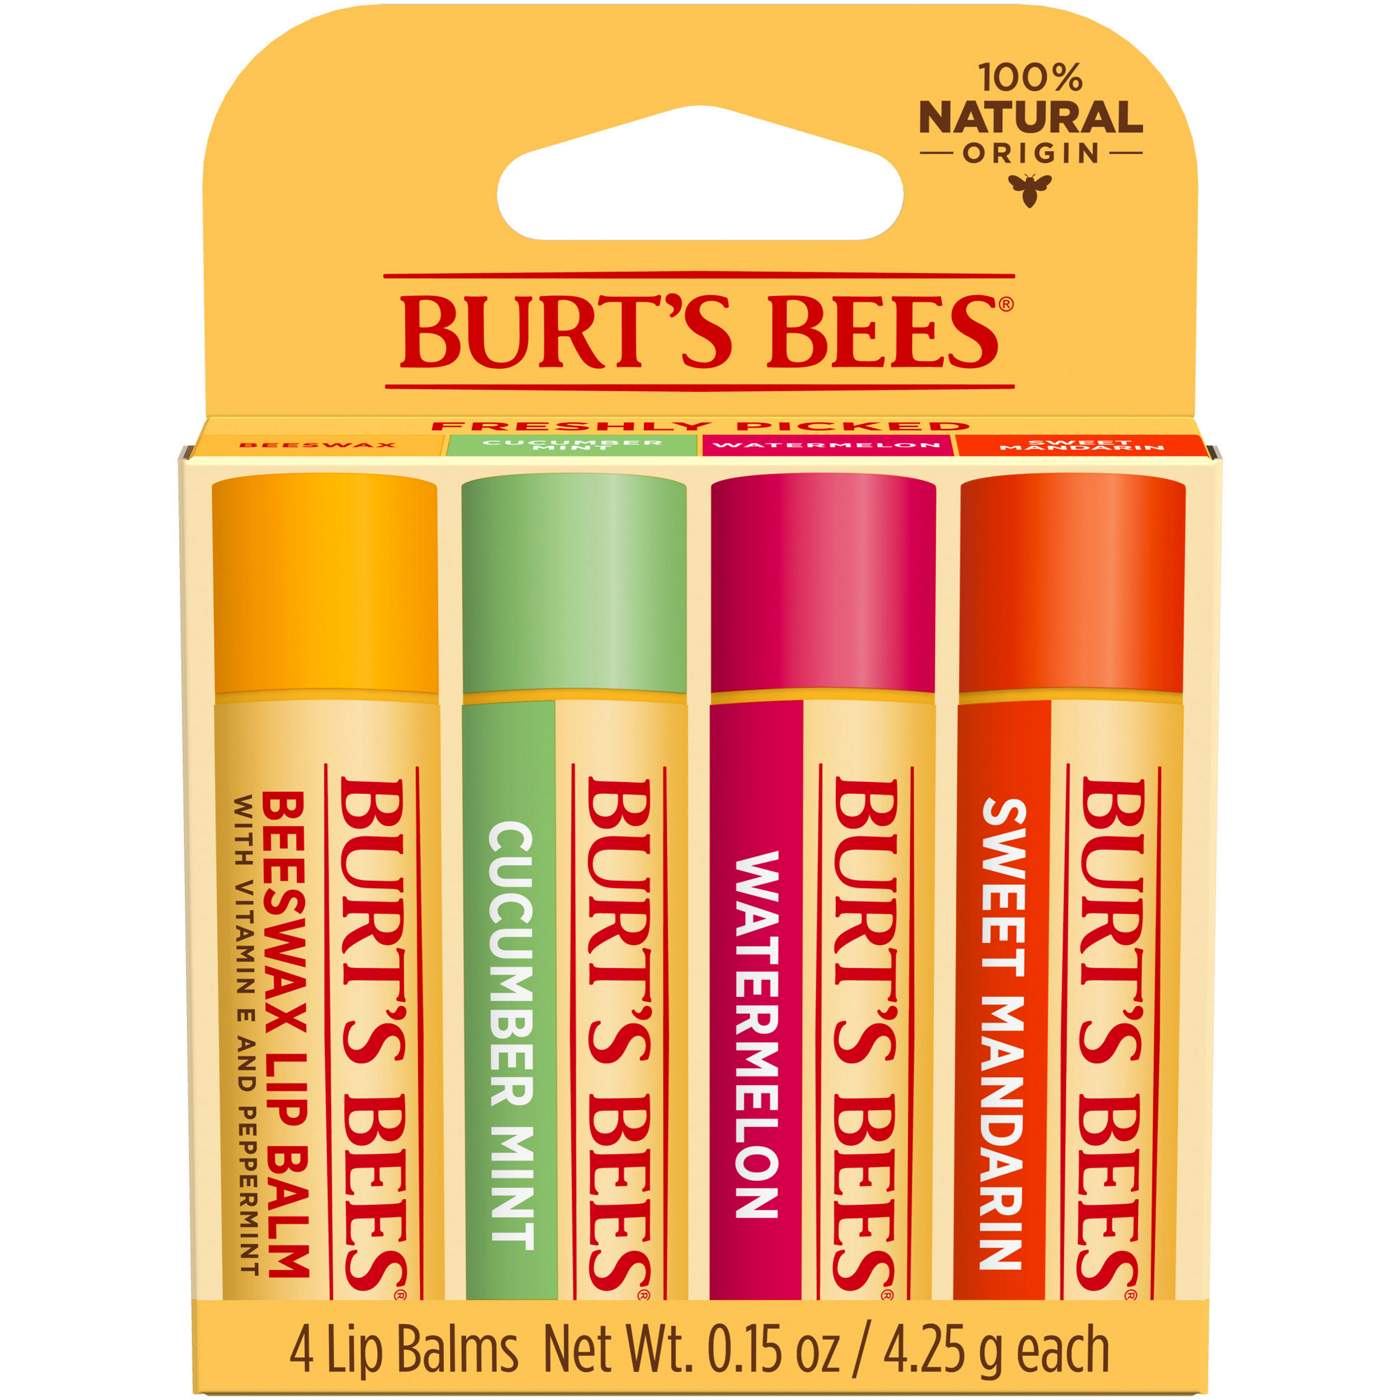 BURT'S BEES Burt's Bees 100% Natural Moisturizing Lip Balm Vanilla